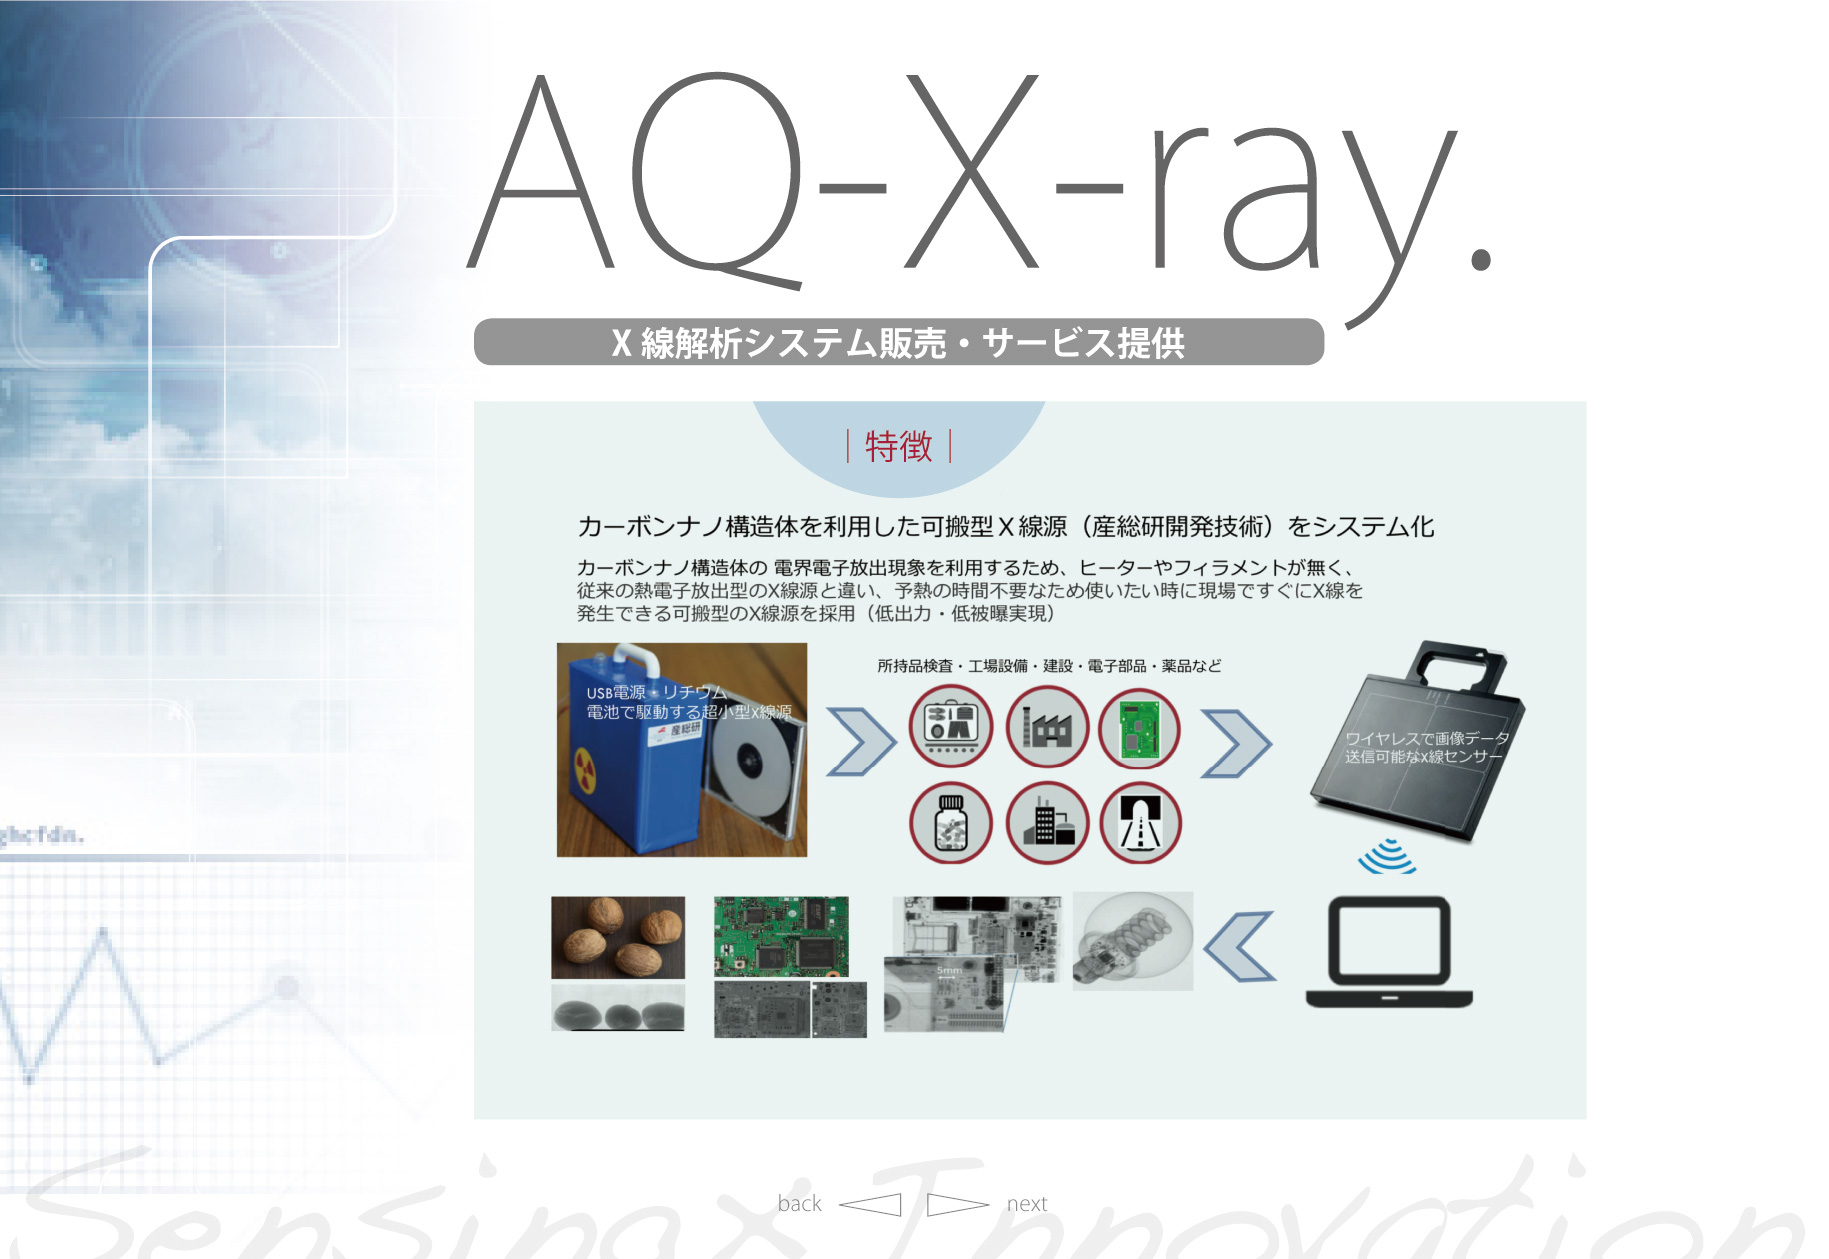 AQ-X-ray X線解析システム販売・サービス提供